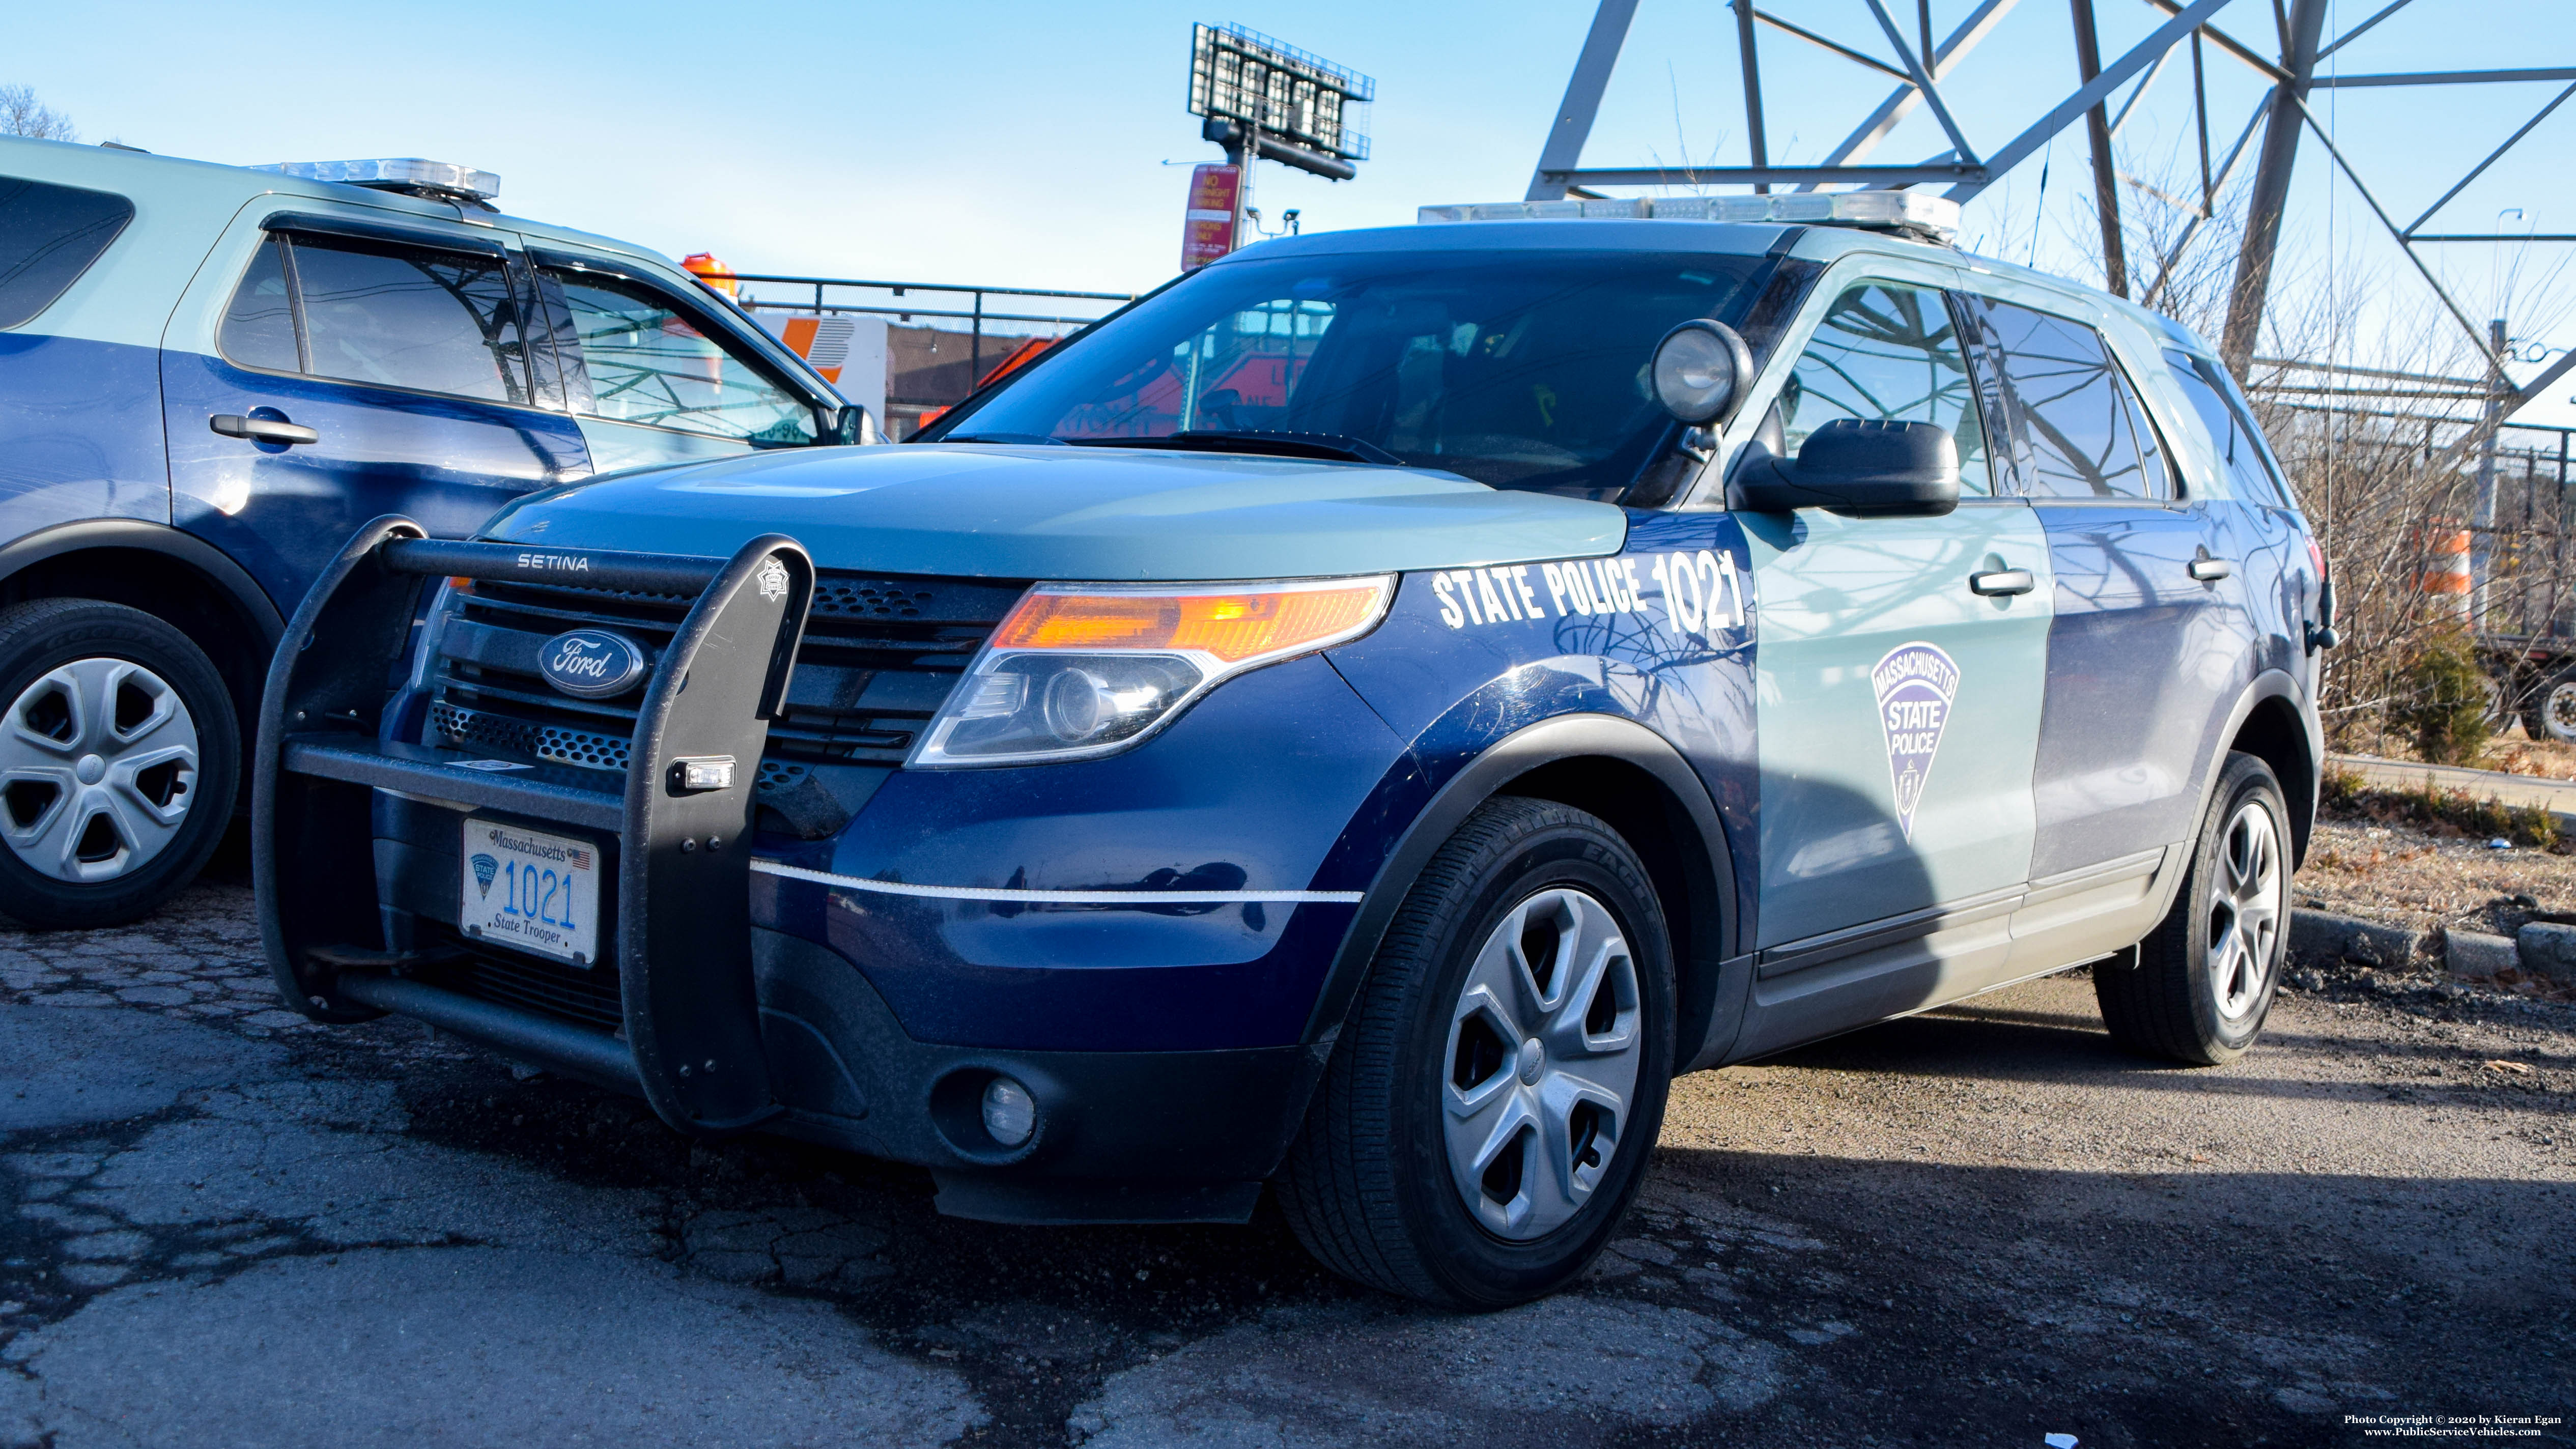 A photo  of Massachusetts State Police
            Cruiser 1021, a 2015 Ford Police Interceptor Utility             taken by Kieran Egan